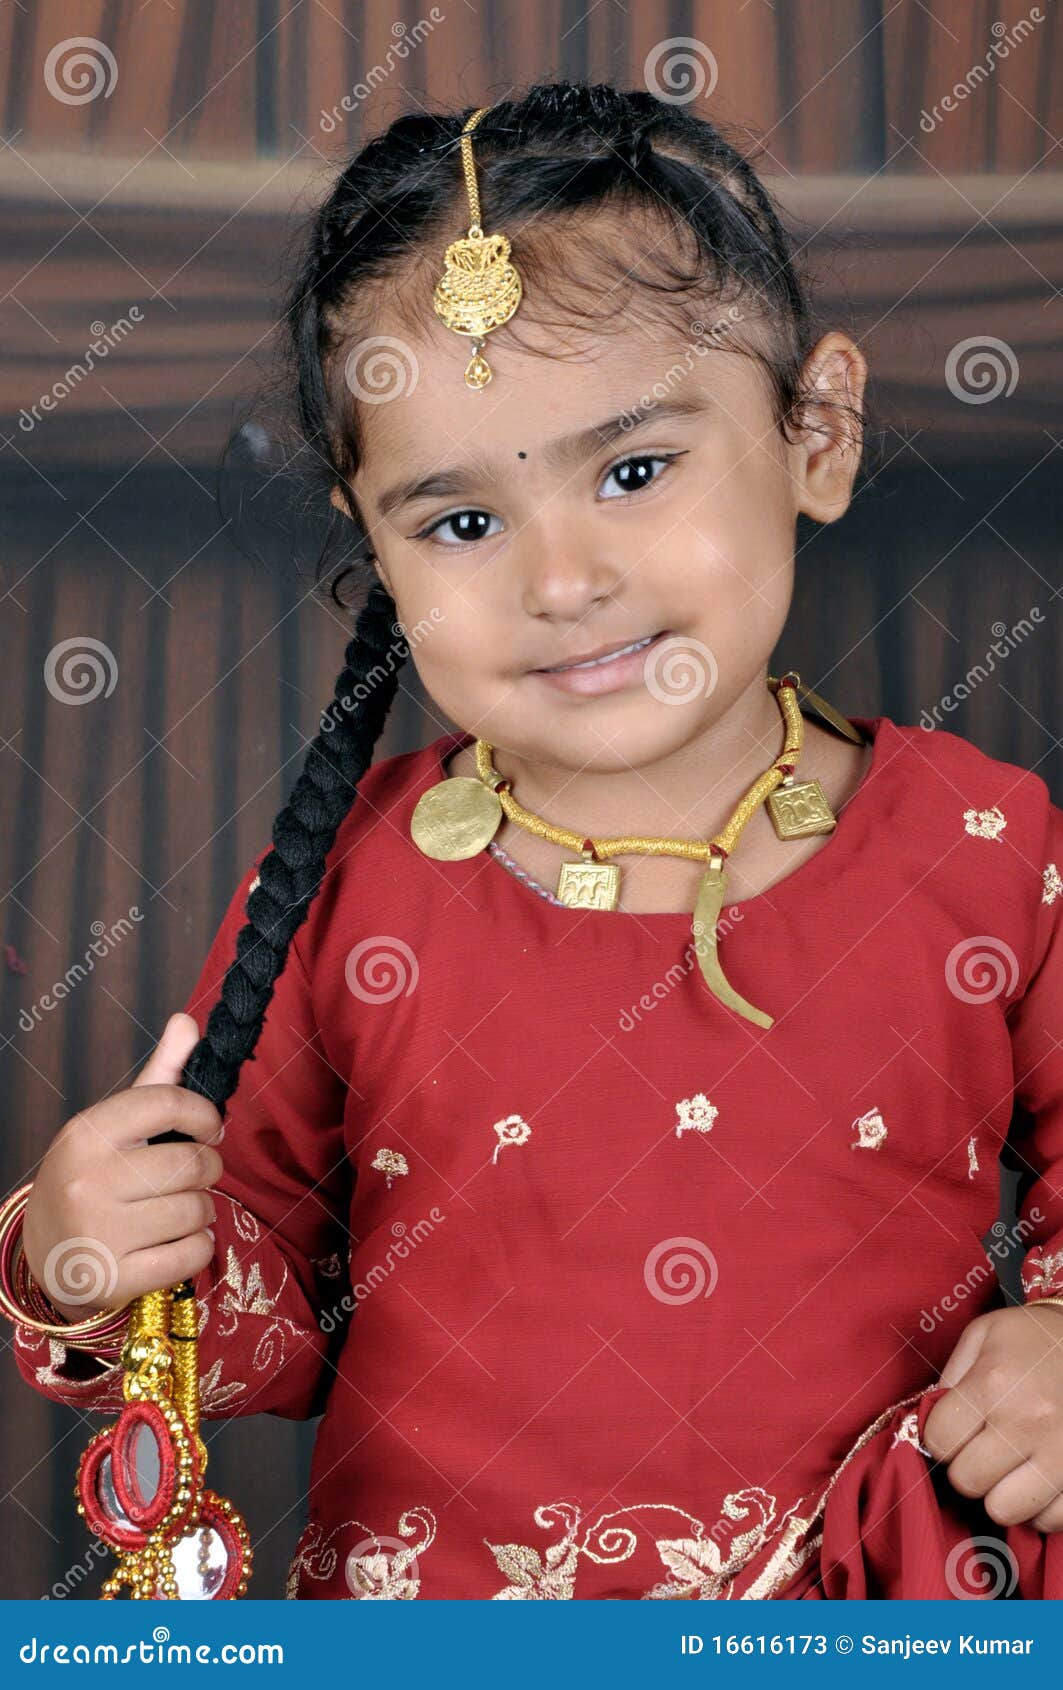 148 Punjabi Child Stock Photos - Free & Royalty-Free Stock Photos from  Dreamstime